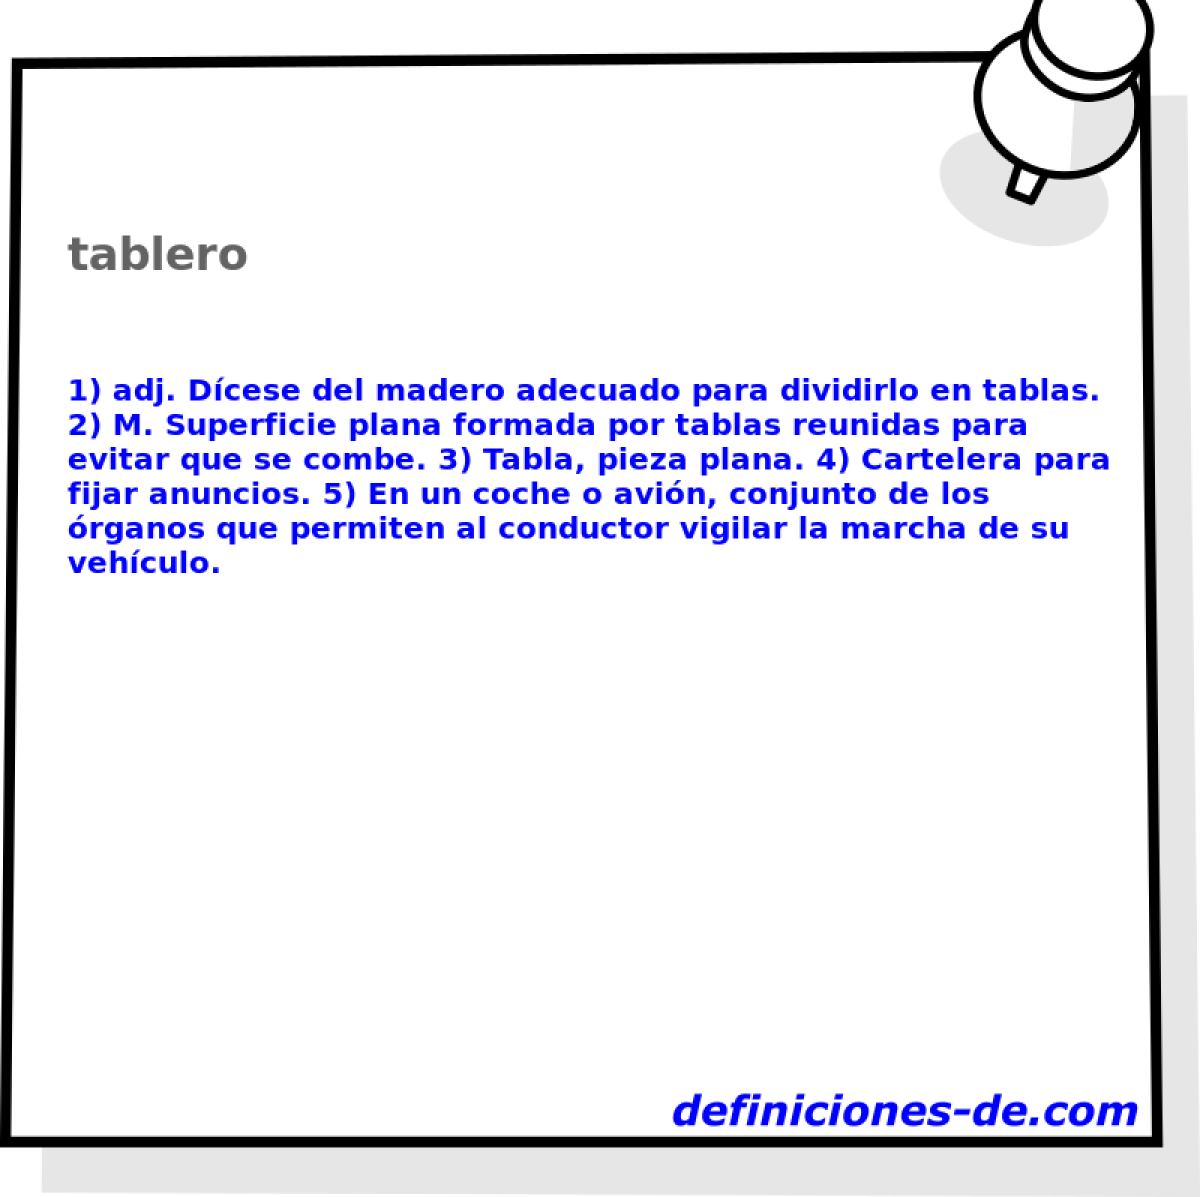 tablero 